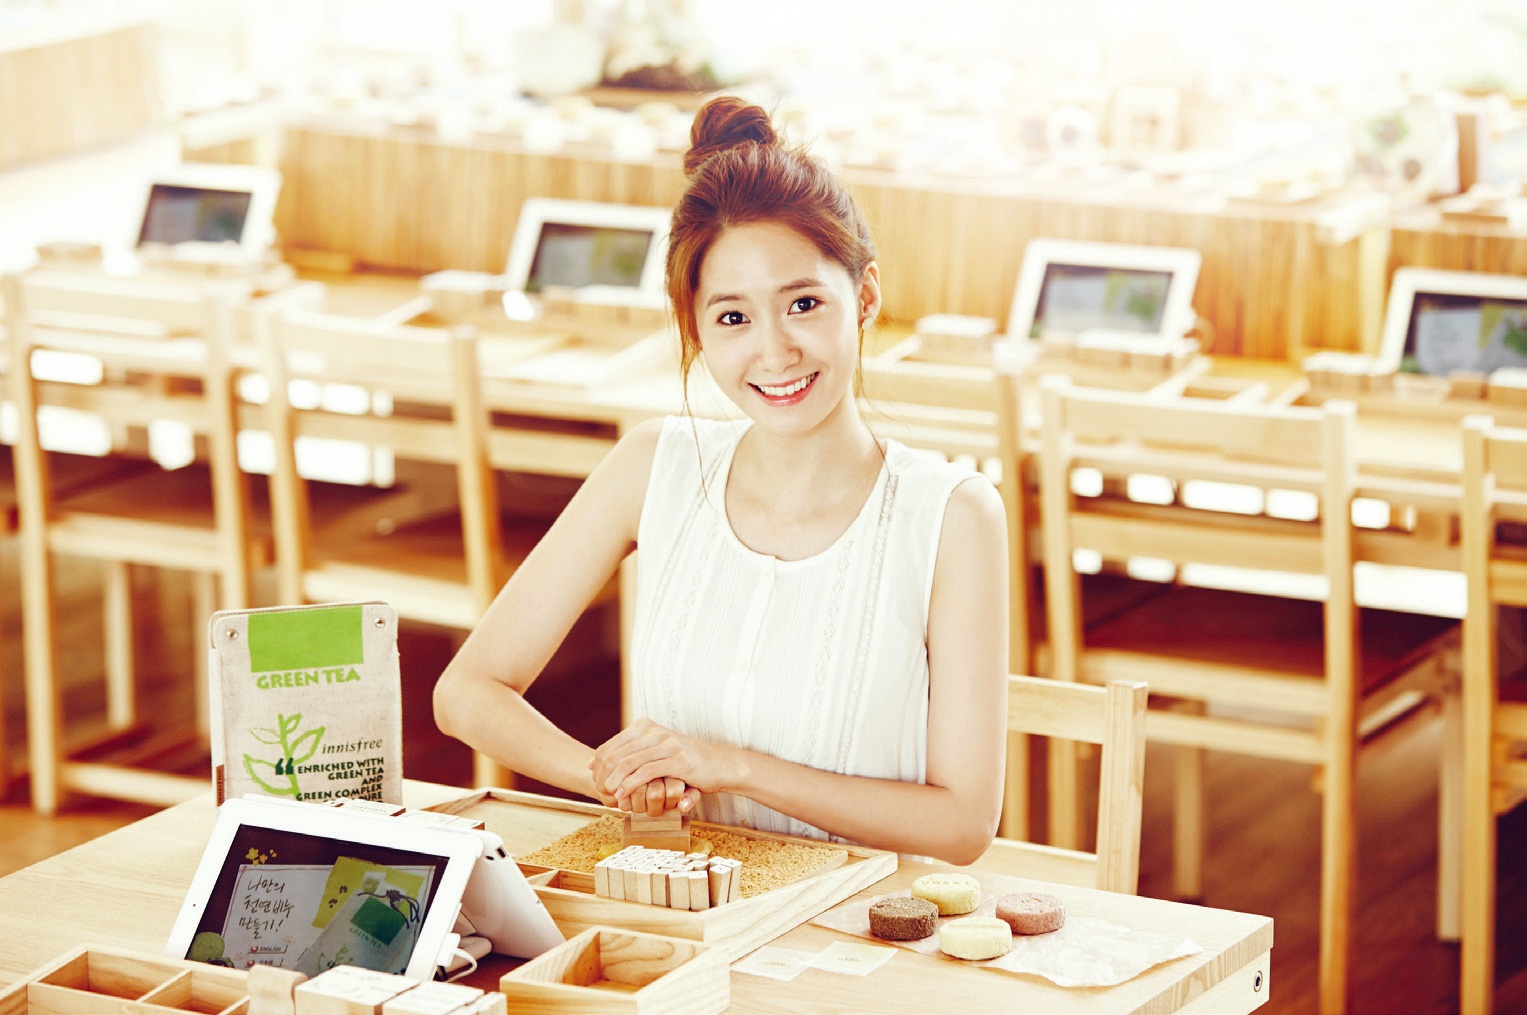 Snsd Yoona Innis Organic Green Cafe Wallpaper HD Hot Sexy Beauty